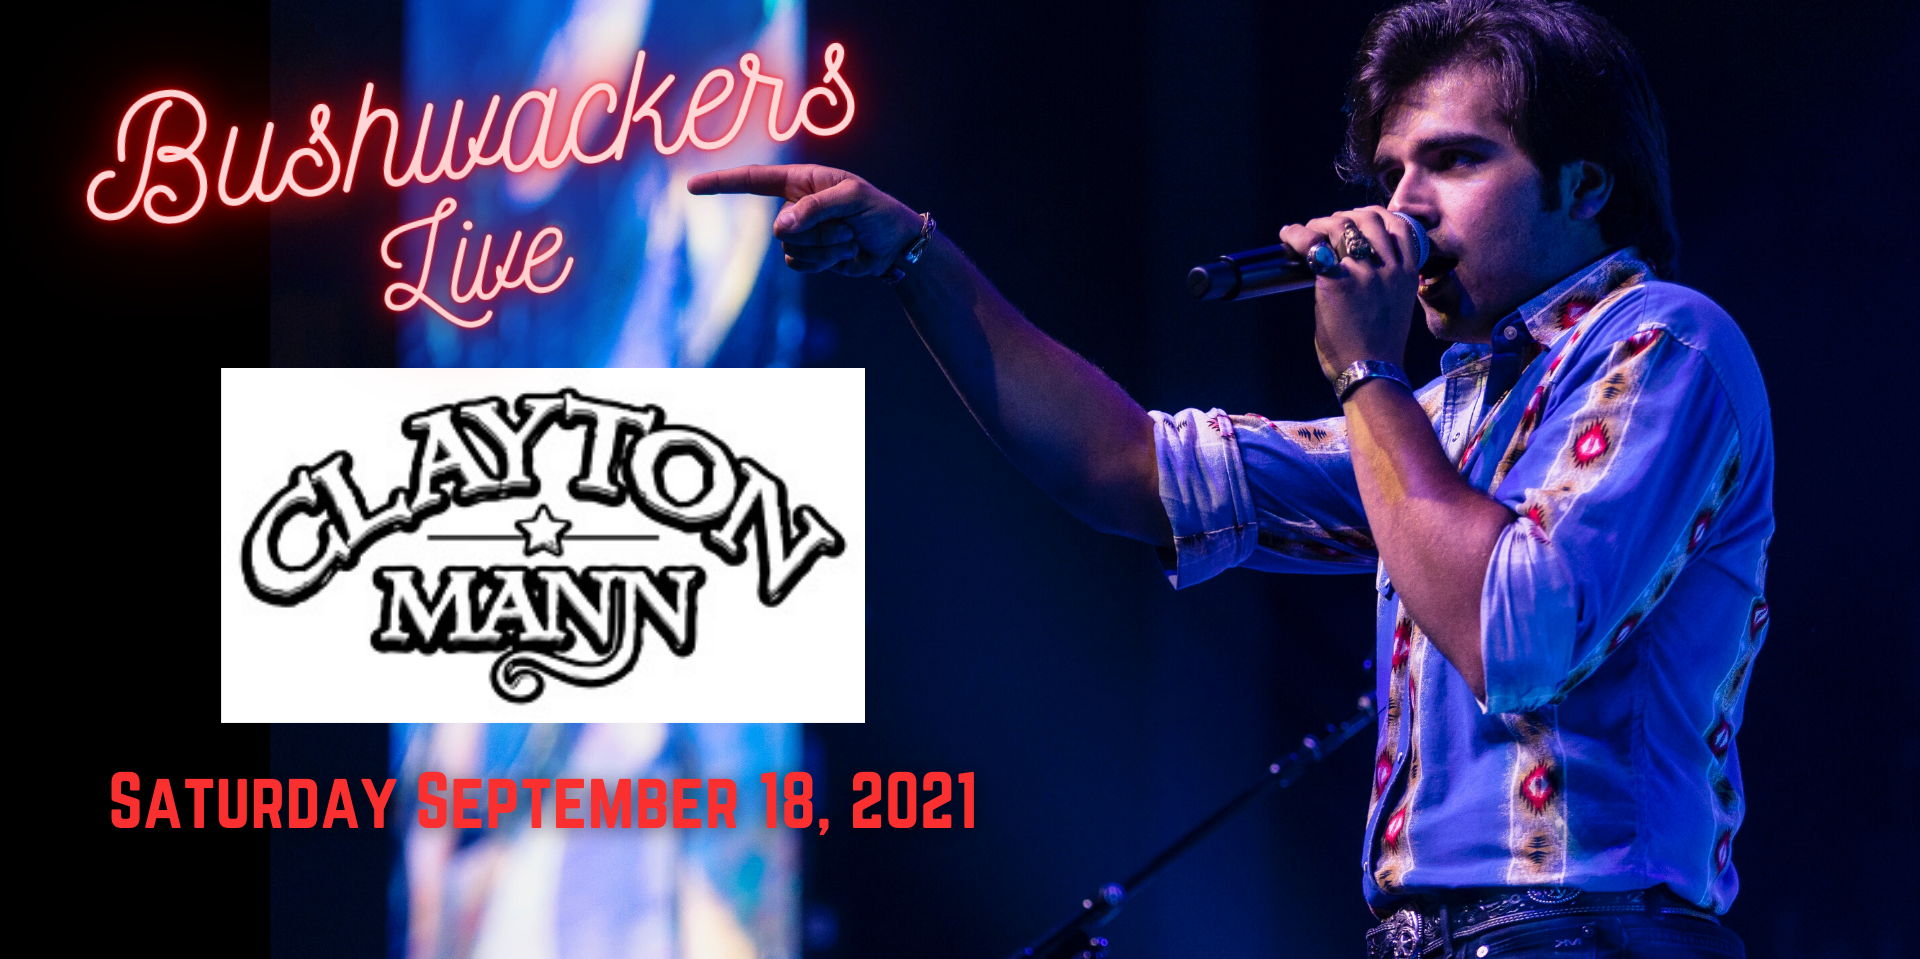 Bushwackers Live: Clayton Mann promotional image